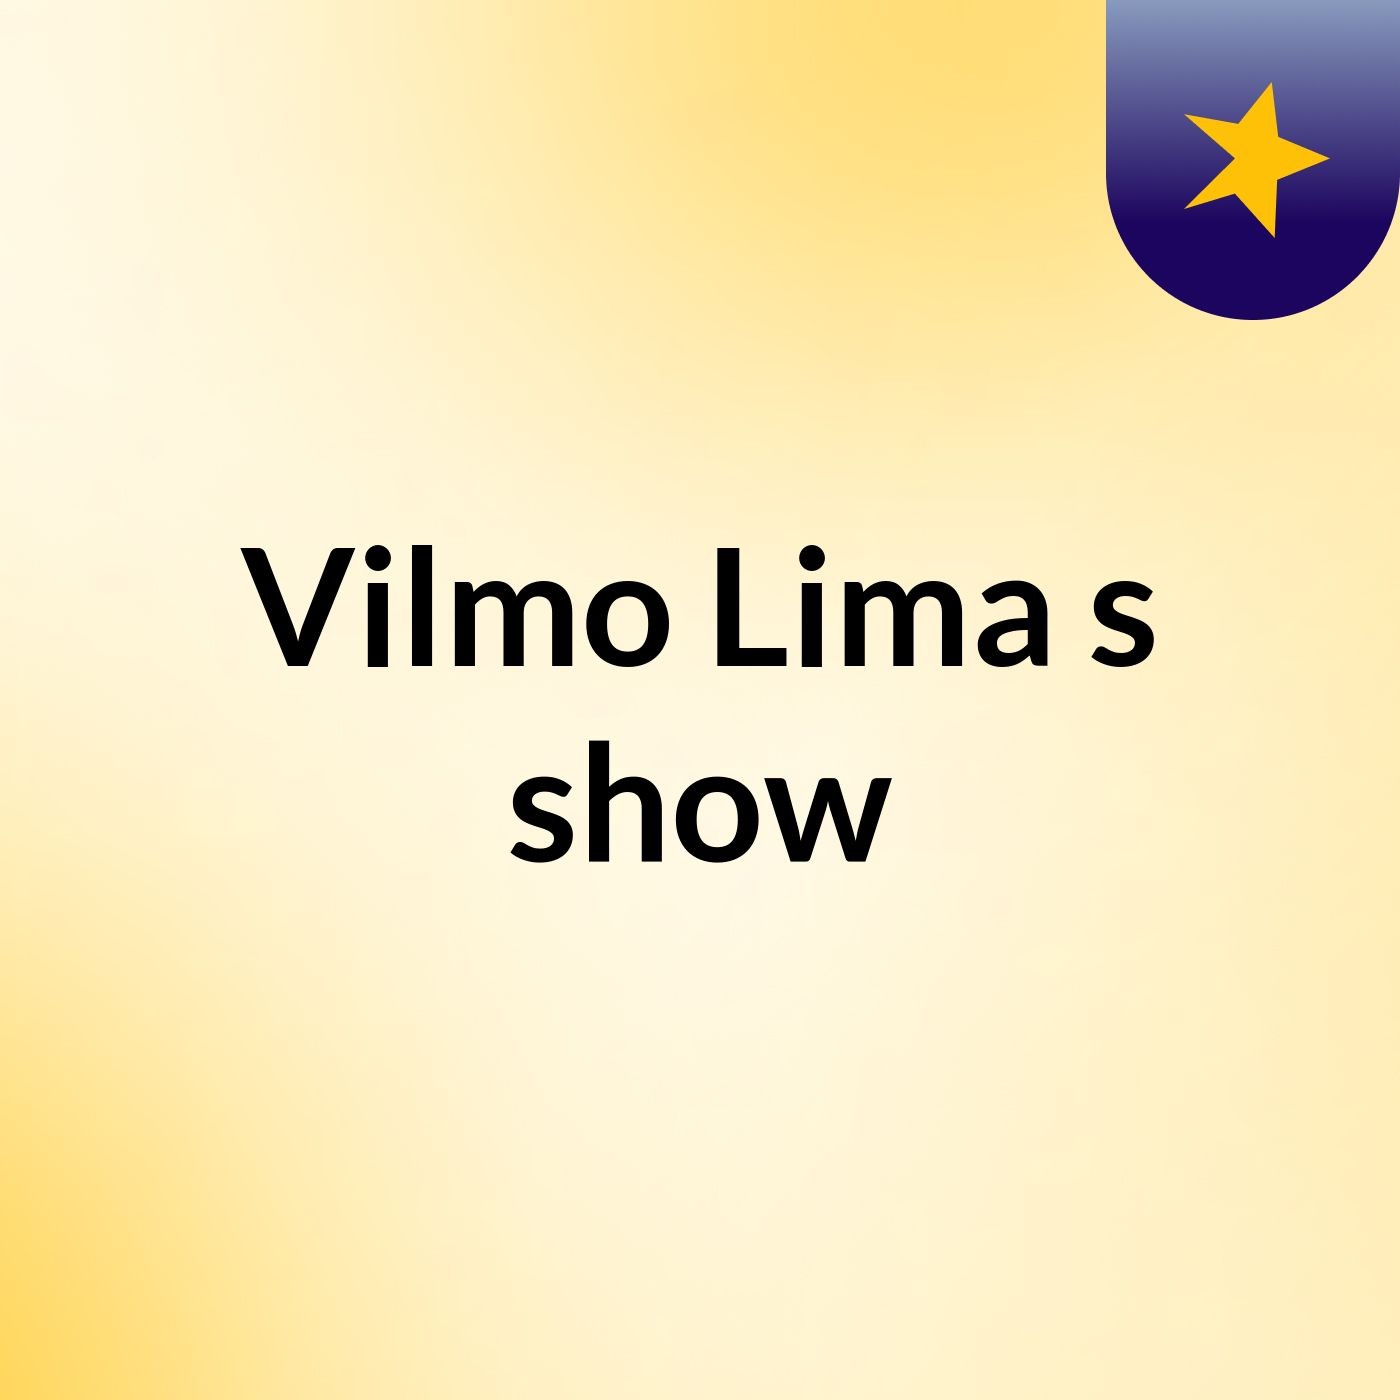 Vilmo Lima's show